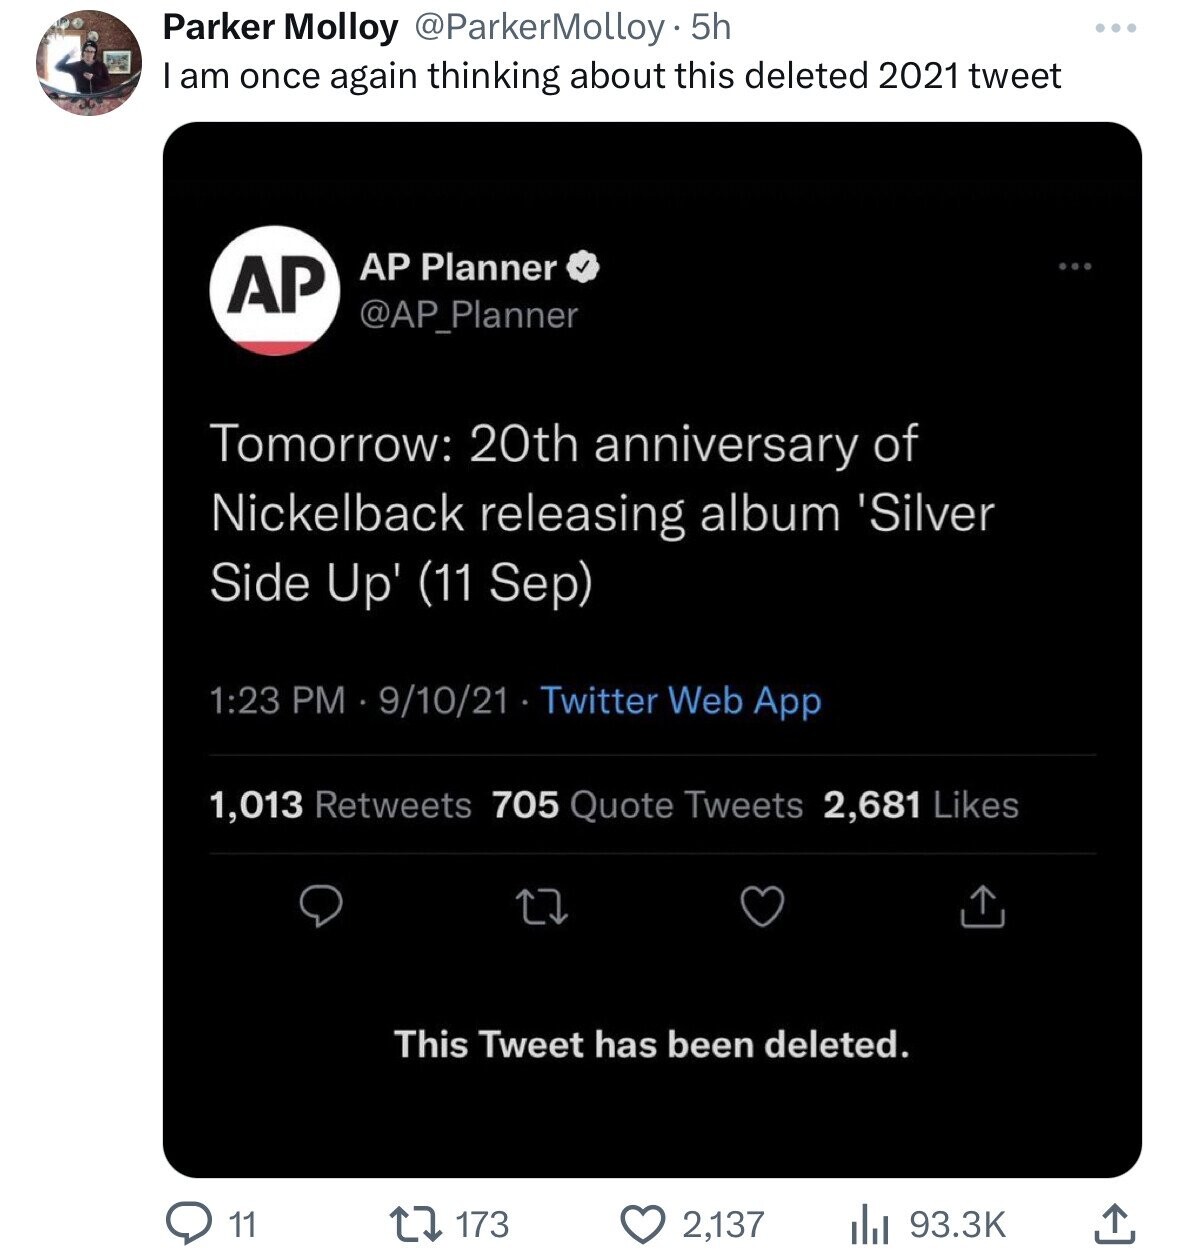 35 9/11 Tweets That Shouldn’t Make Us Laugh, But Do